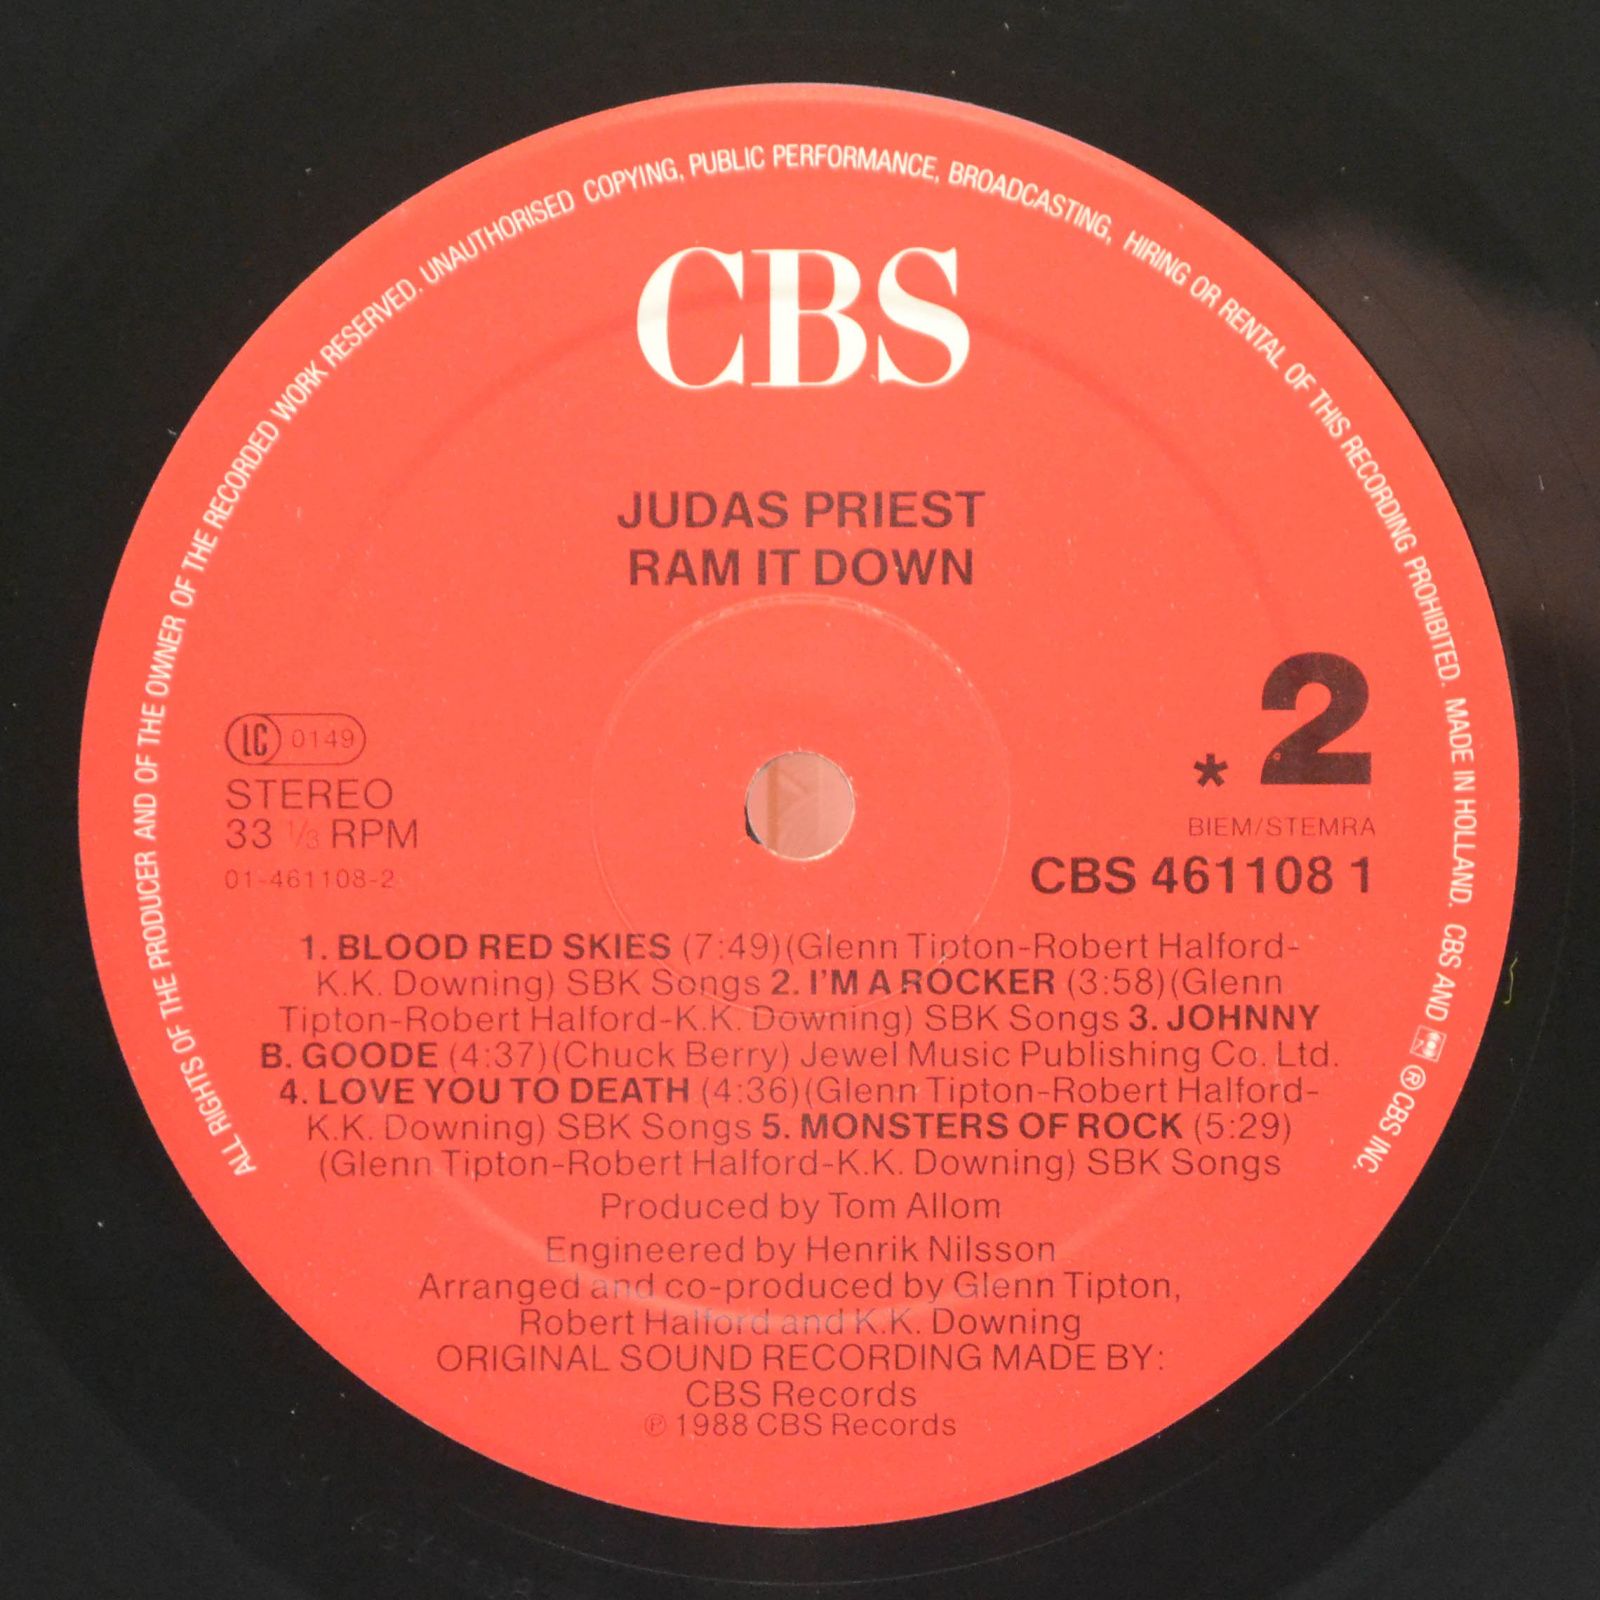 Judas Priest — Ram It Down, 1988